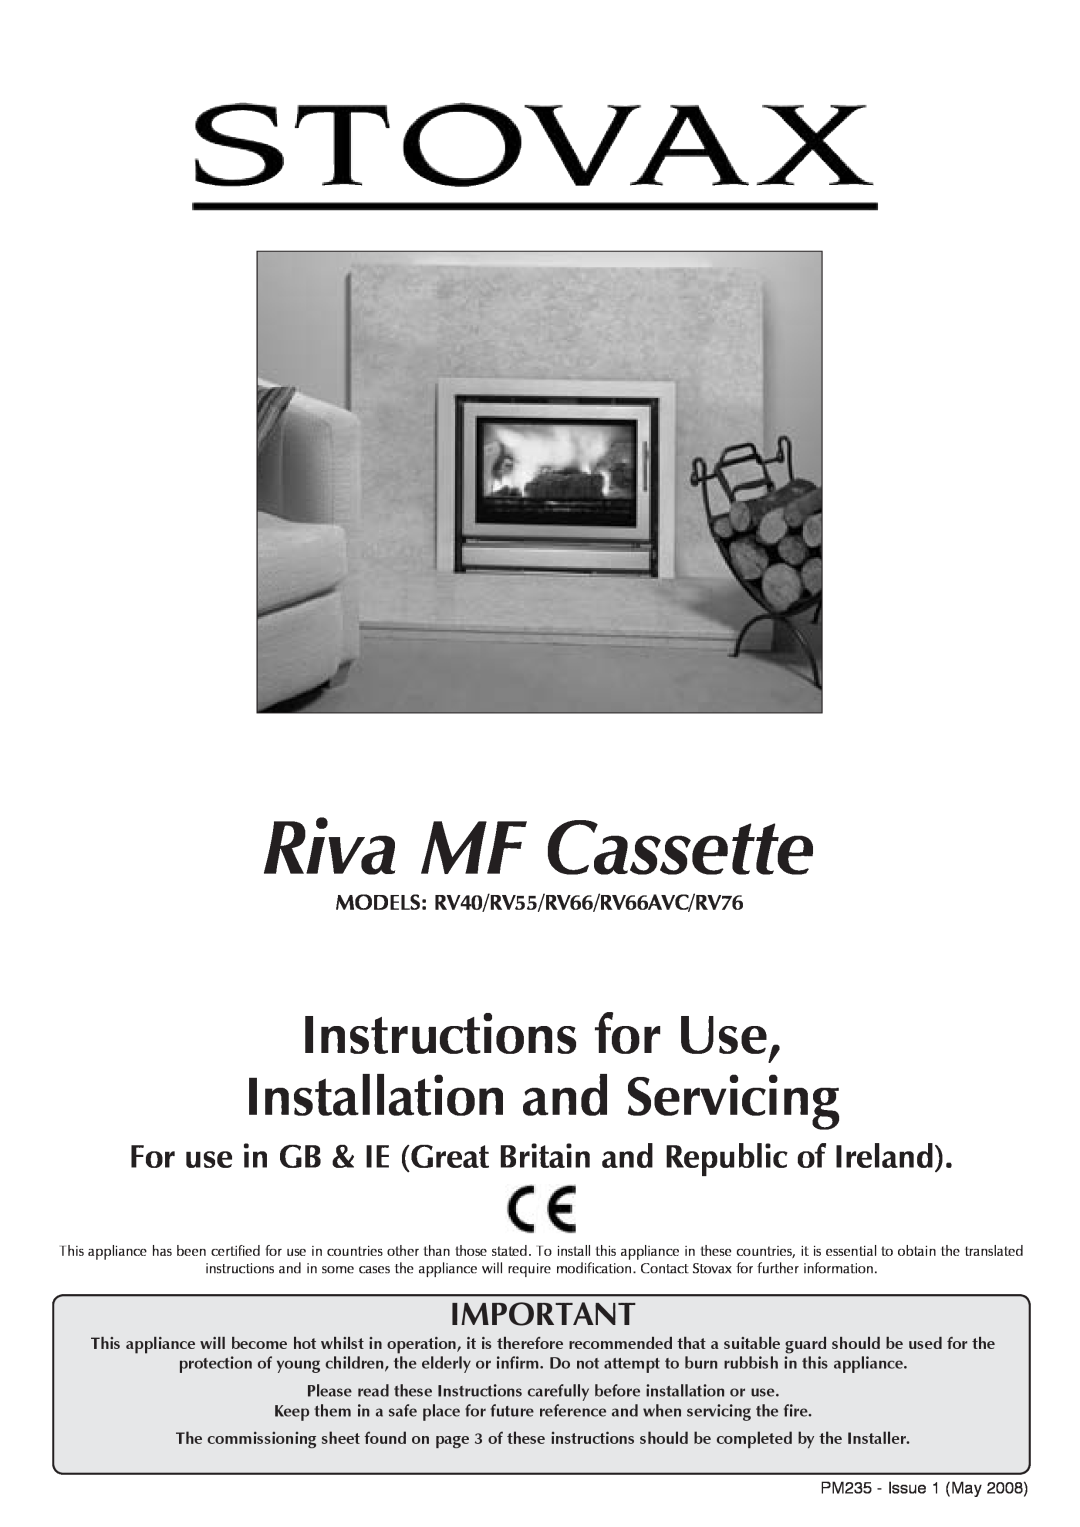 Stovax manual MODELS RV40/RV55/RV66/RV66AVC/RV76, Riva MF Cassette, Instructions for Use Installation and Servicing 